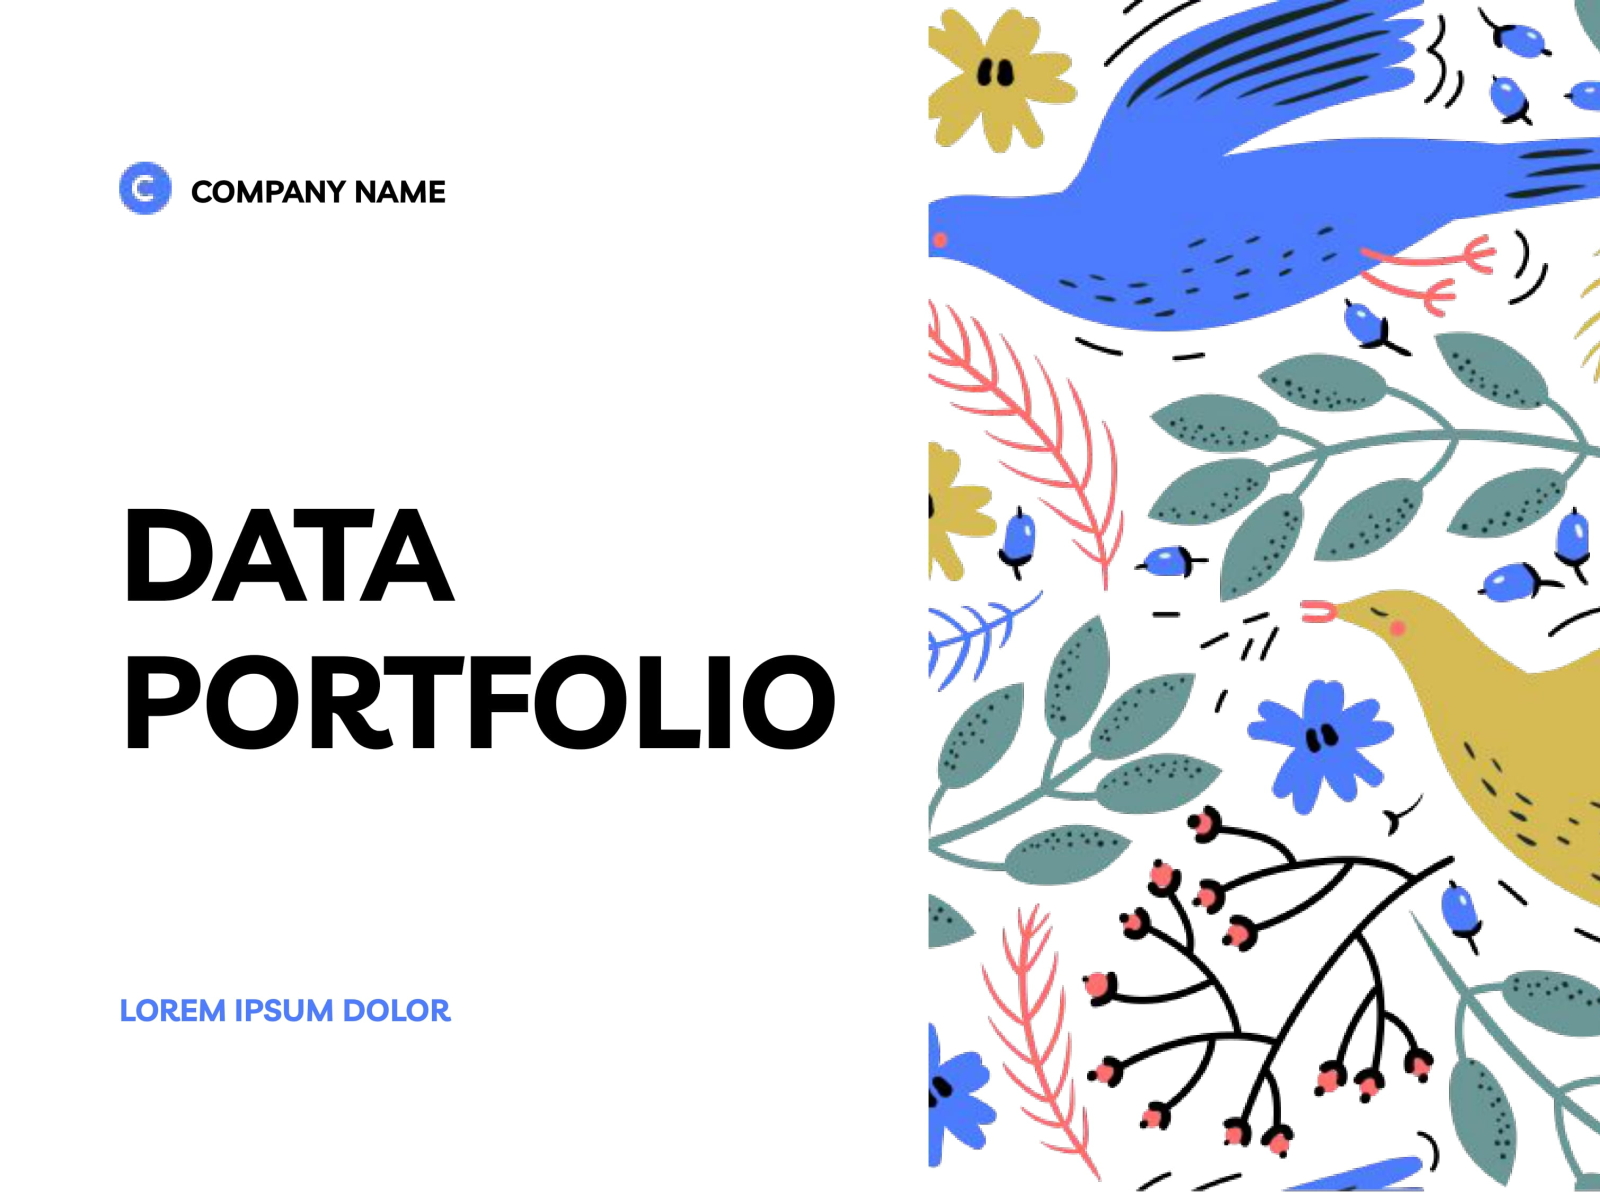 data-portfolio-template-by-free-google-docs-google-slide-templates-on